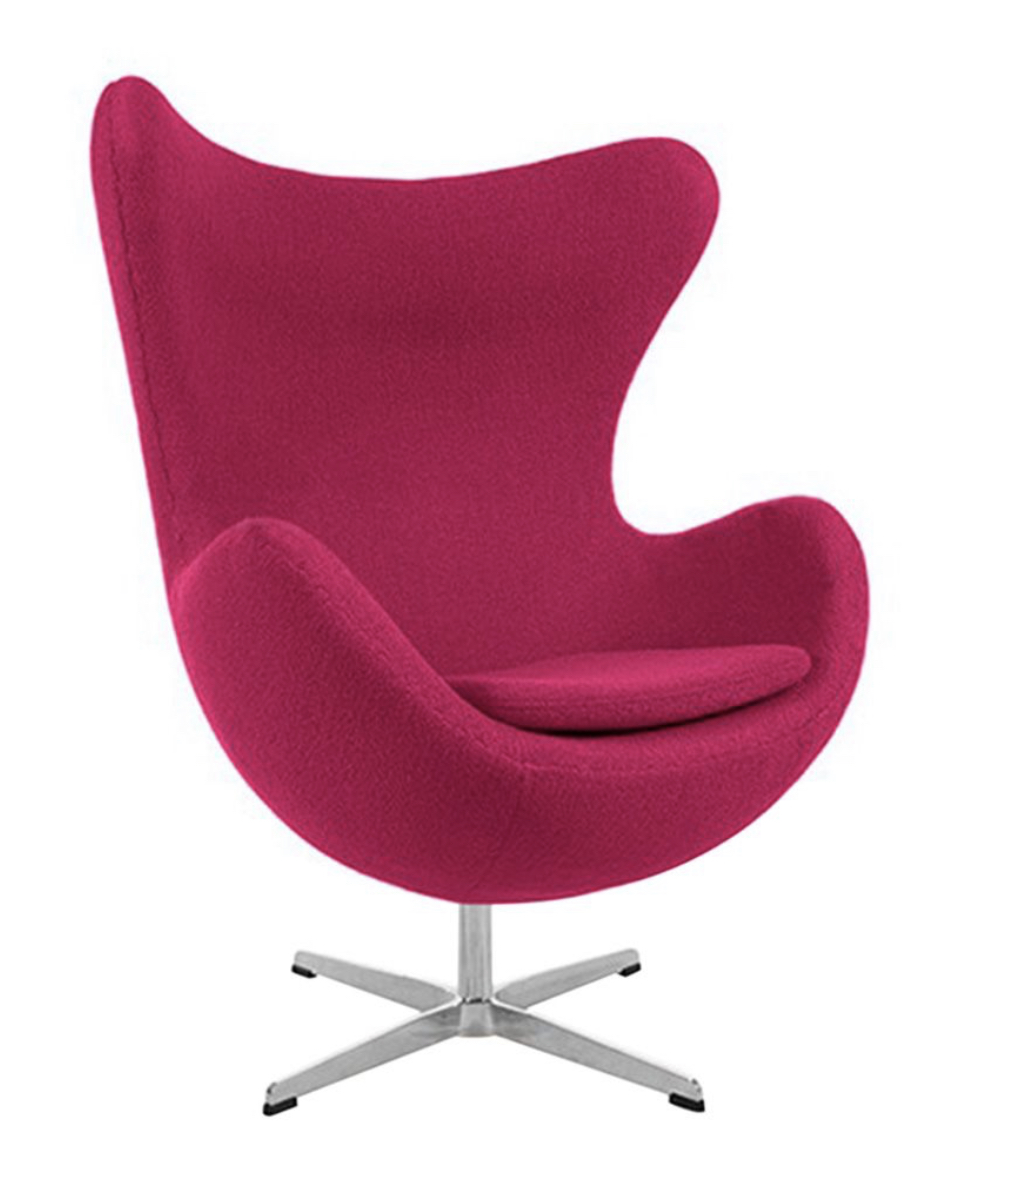 Arne Jacobsen Style Egg Chair Wool Pink